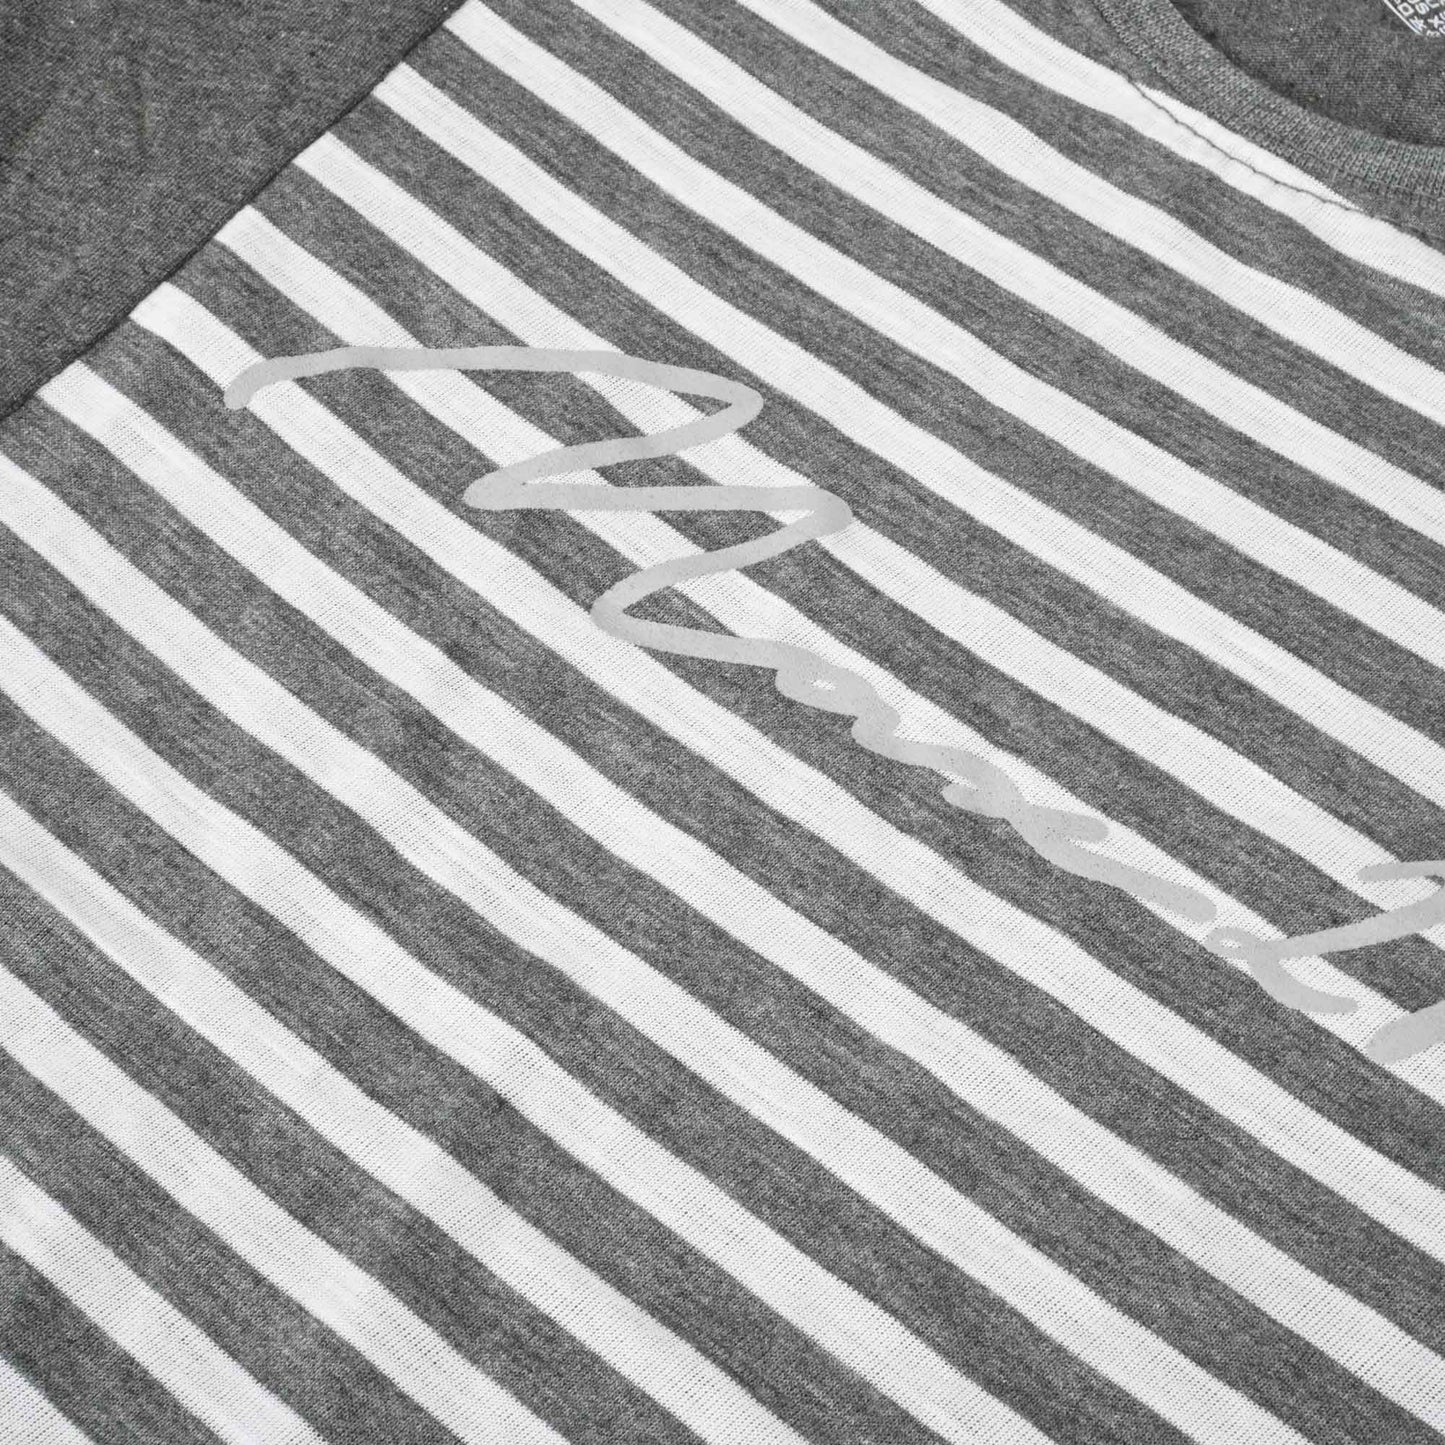 Max 21 Men's Logo Printed Stripes Style Short Sleeve Tee Shirt